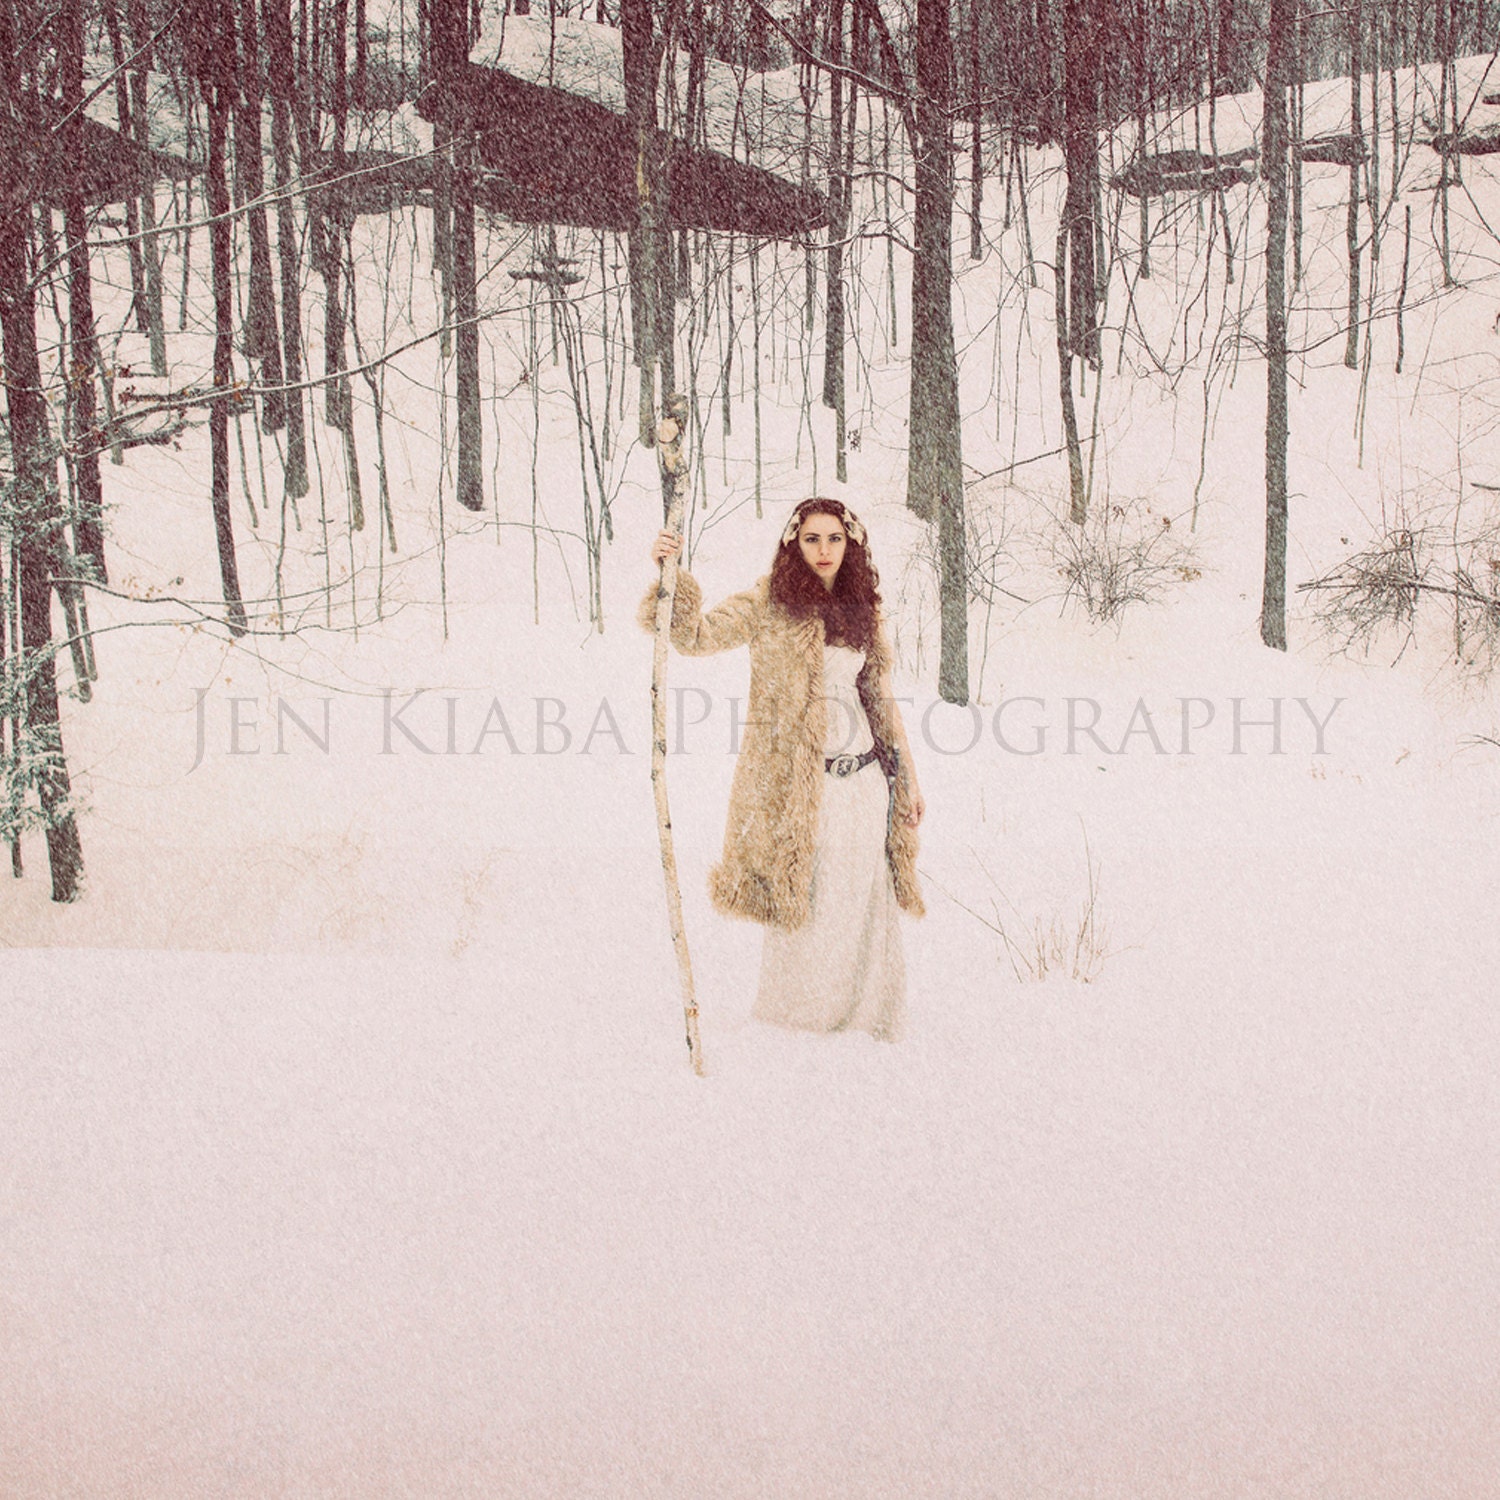 Wayfaring - Snowy Fantasy Woodland Fine Art Photography Print - Jenkiabaphotography